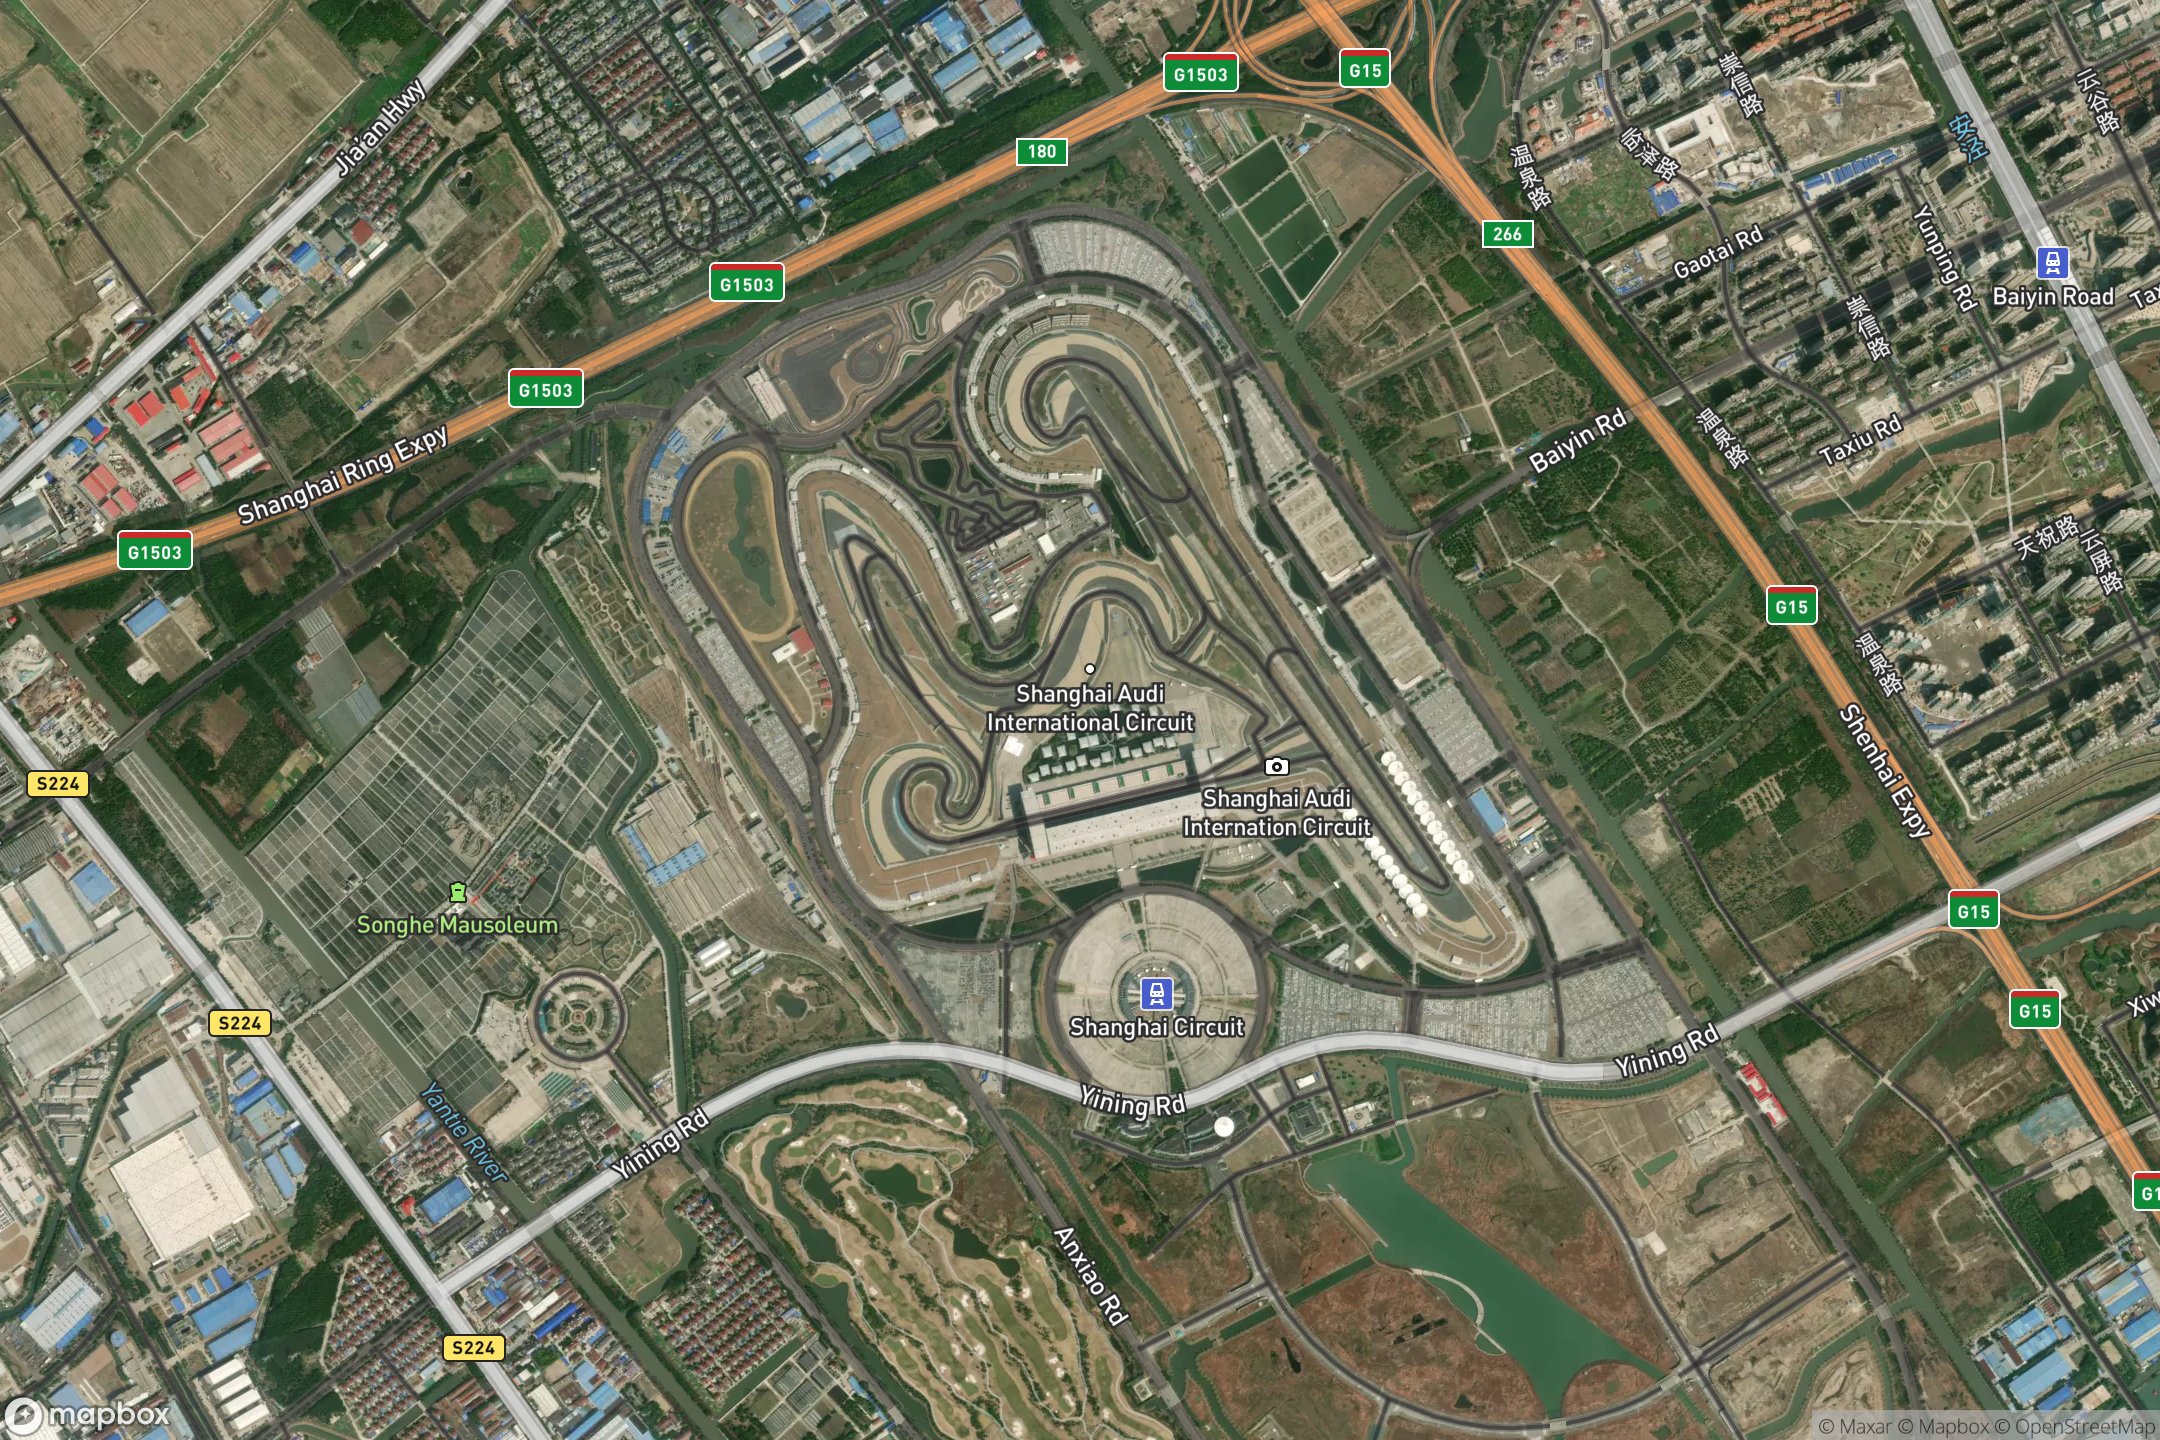 Vue satellite du circuit Shanghai International 